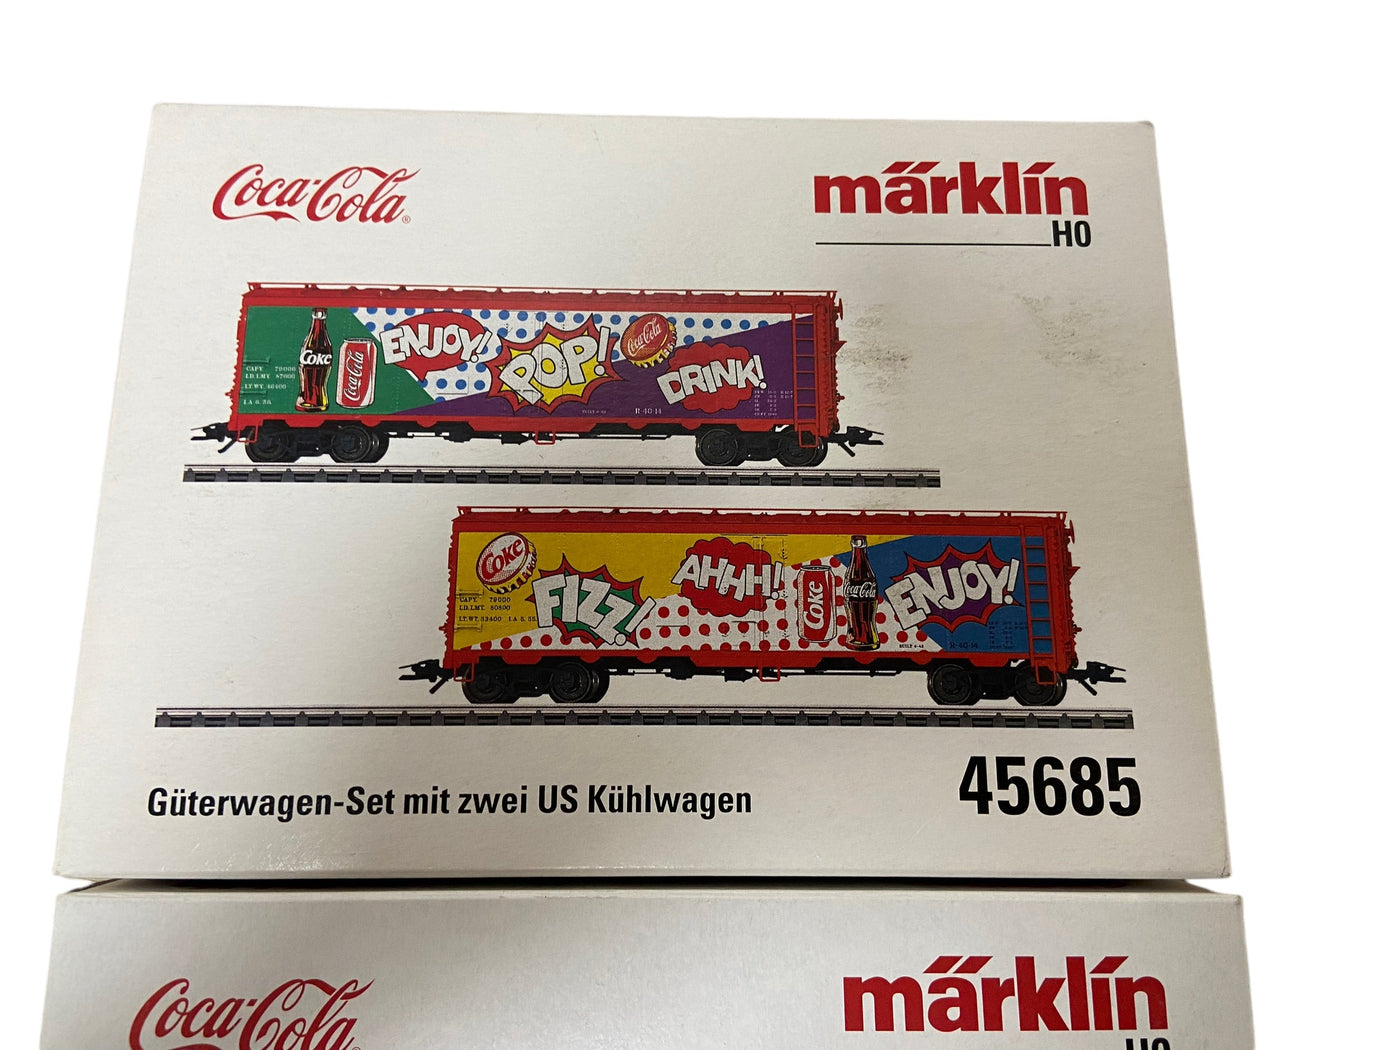 Marklin CocaCola sets - 45685 - 45687 - 45686 - NEW